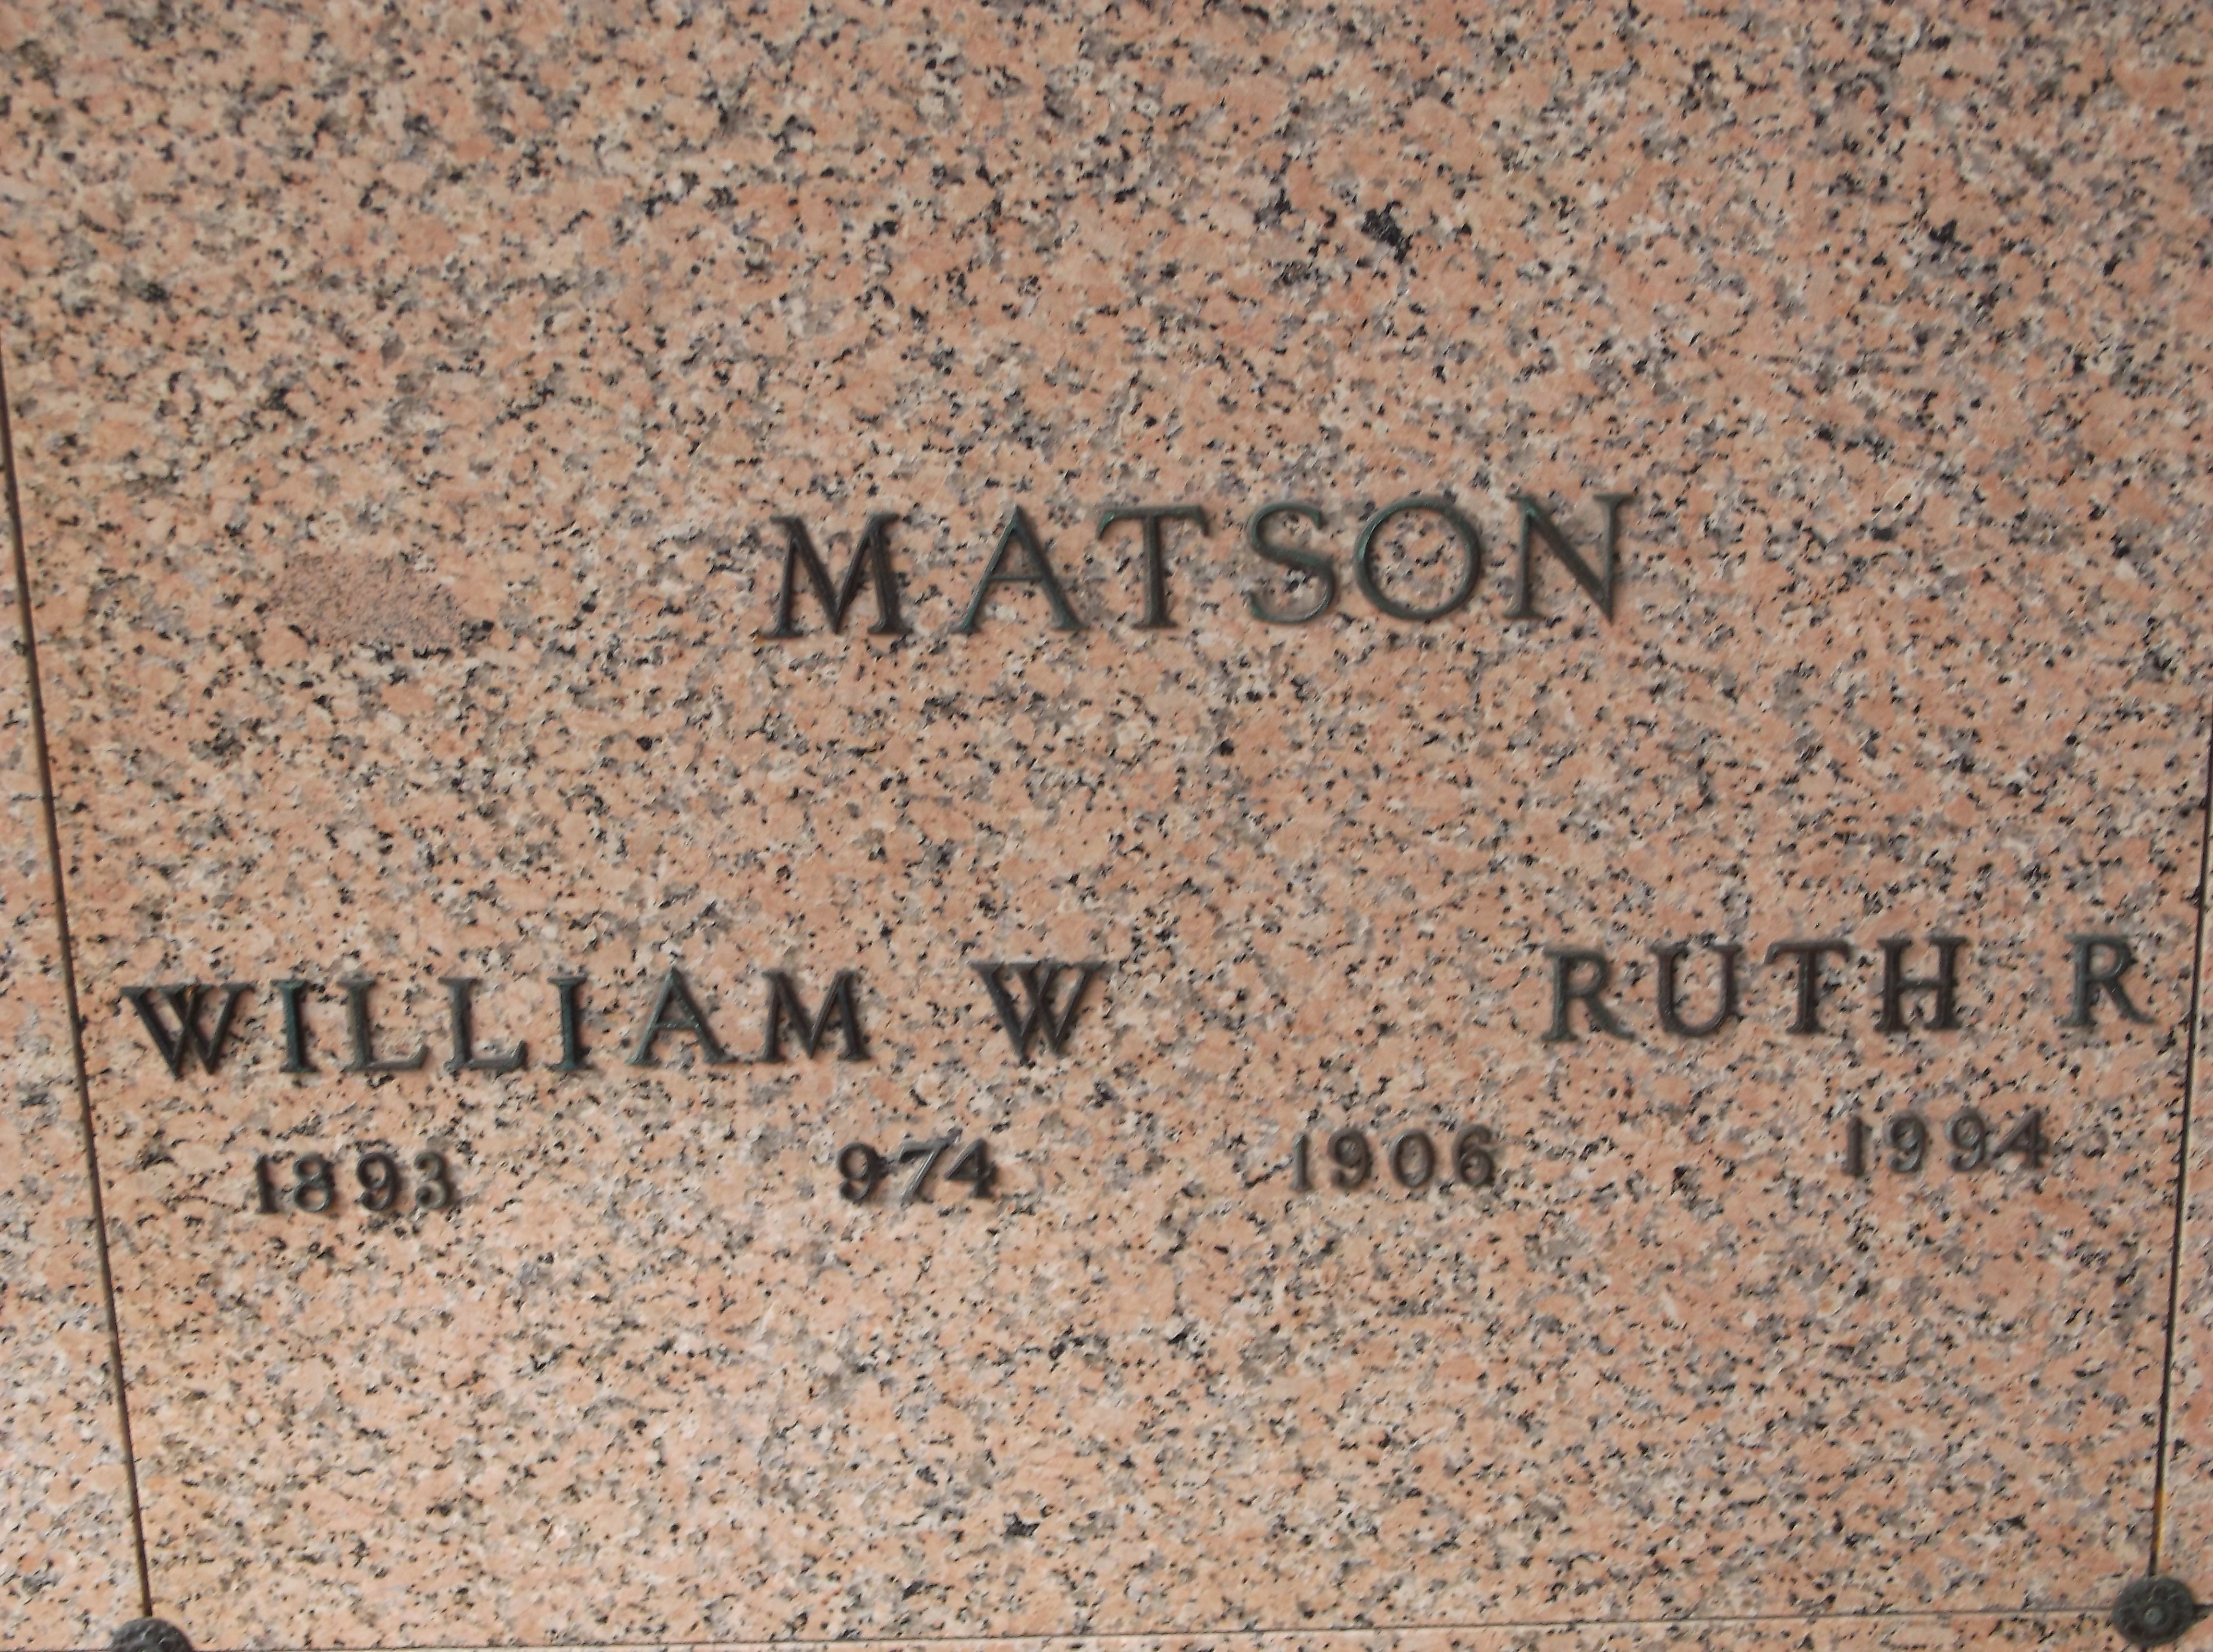 William W Matson